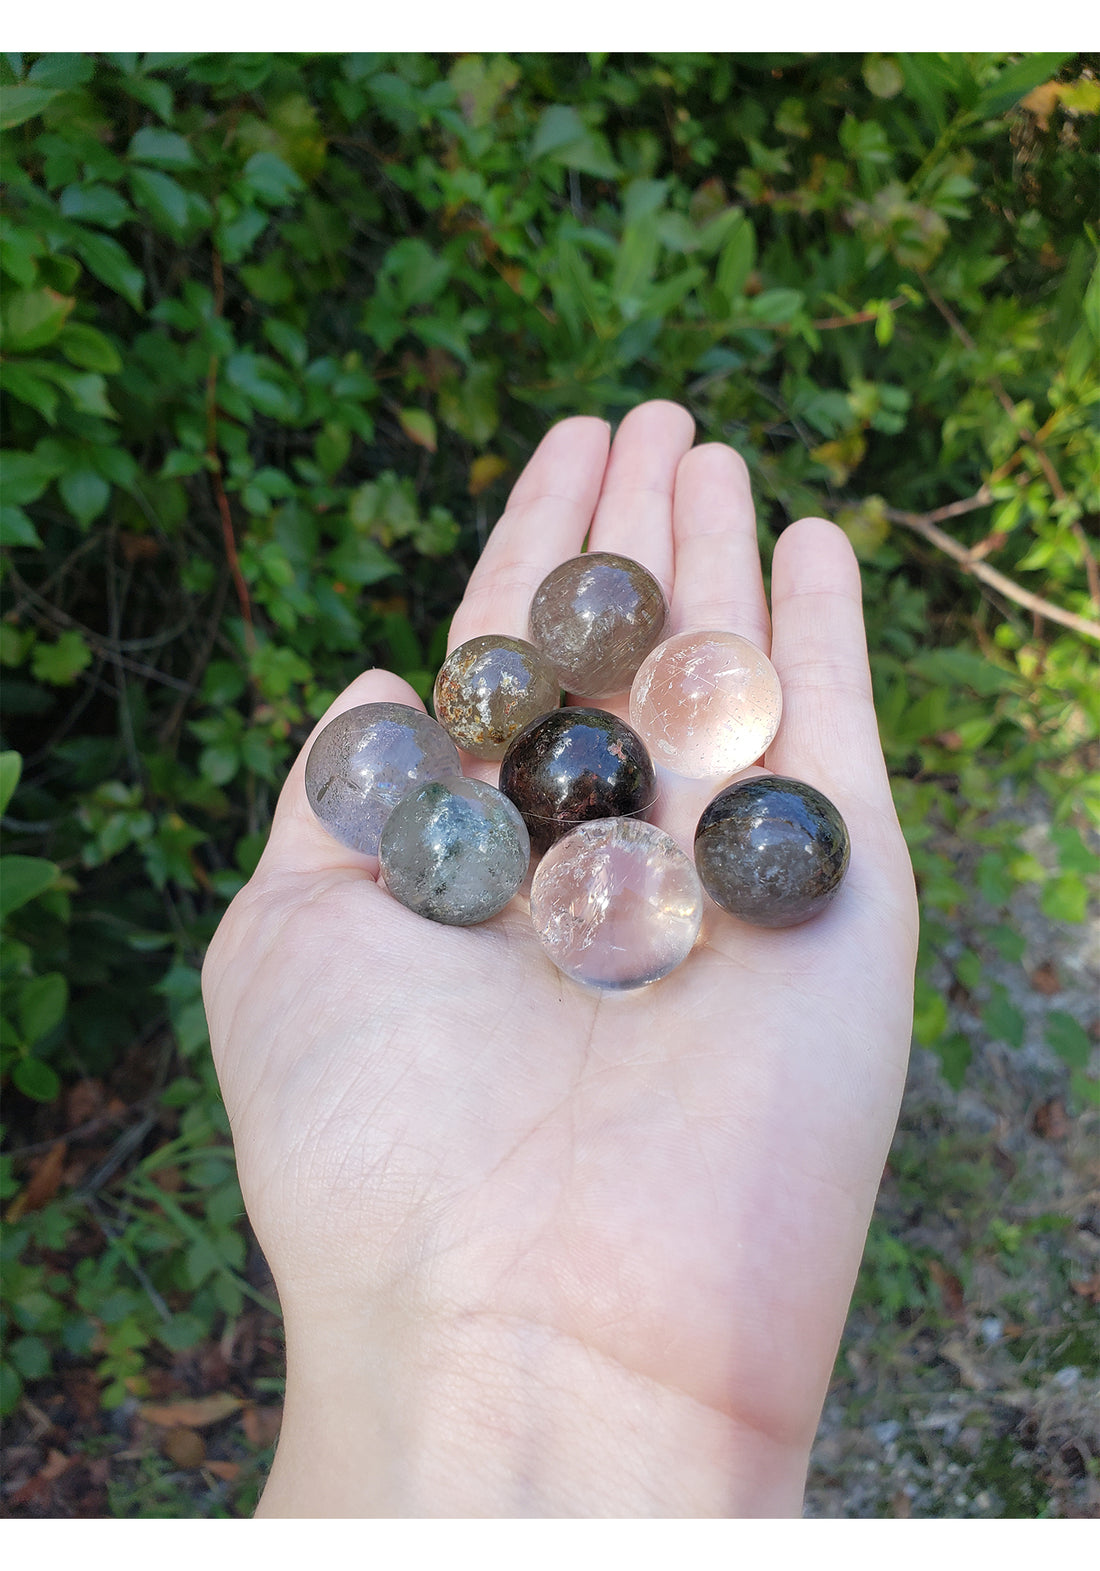 Rutile & Included Quartz Lodolite Gemstone Sphere Orb Marble - Multiple Sizes!